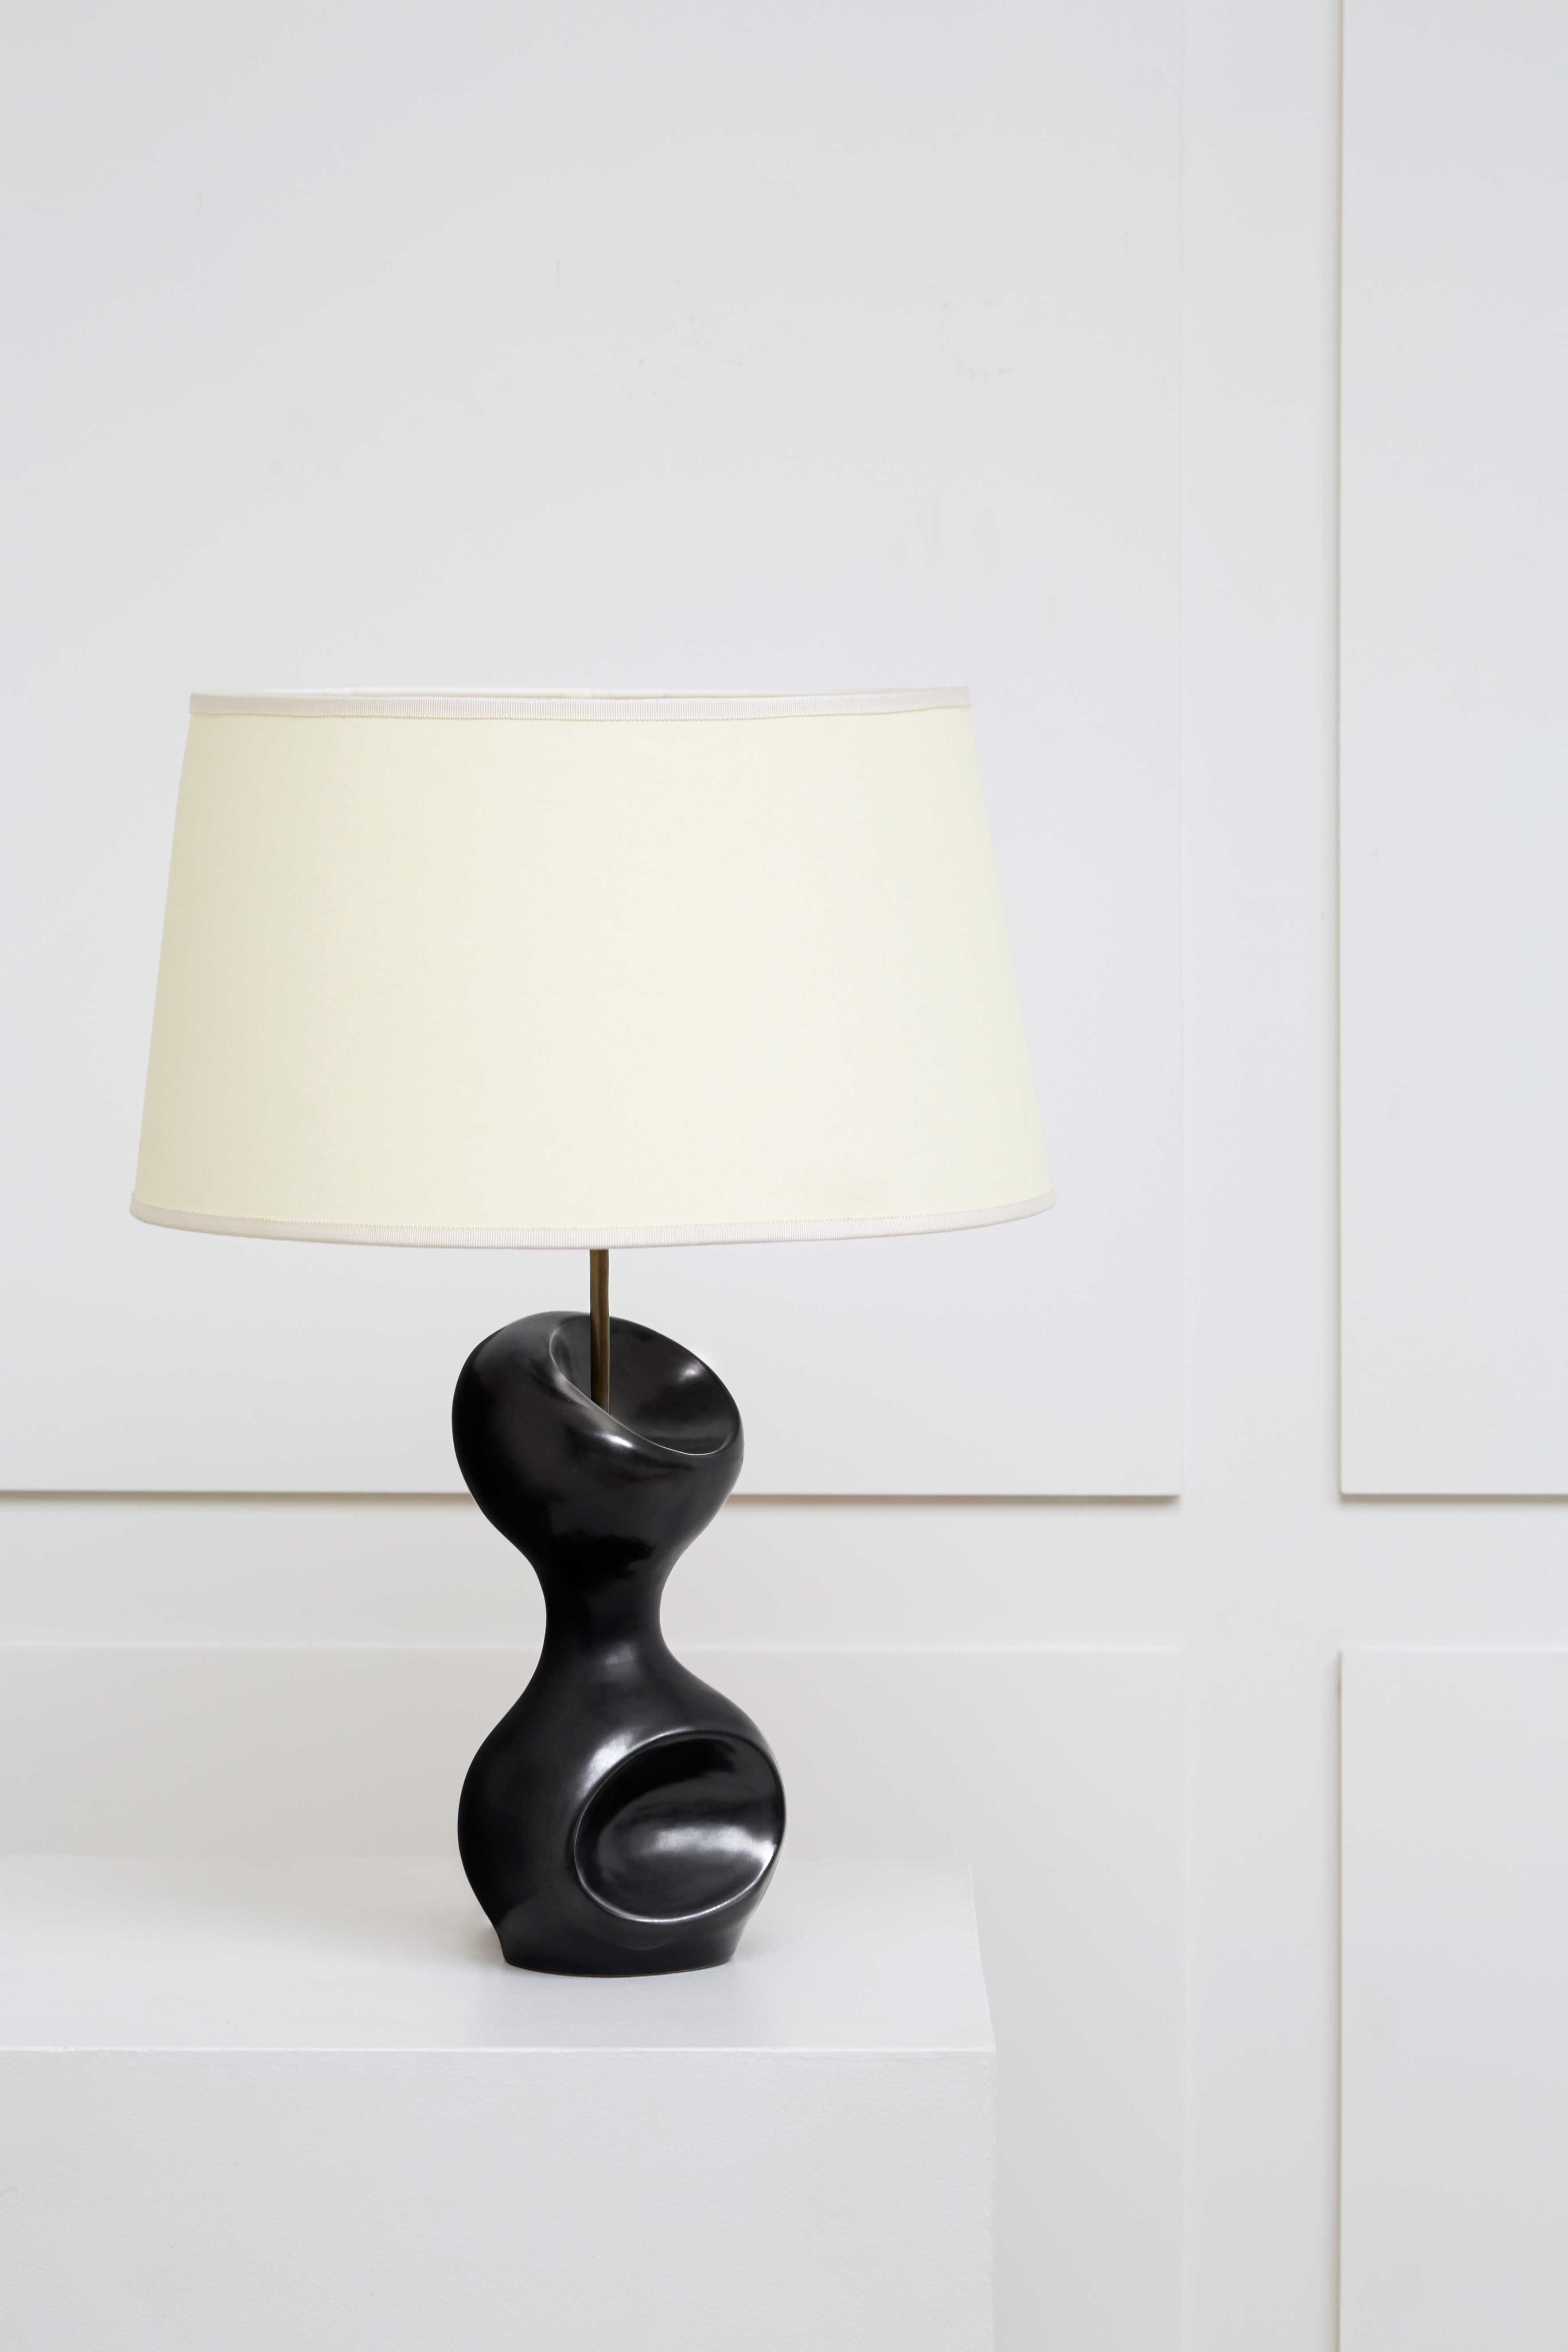 Georges Jouve, Ceramic lamp, vue 01